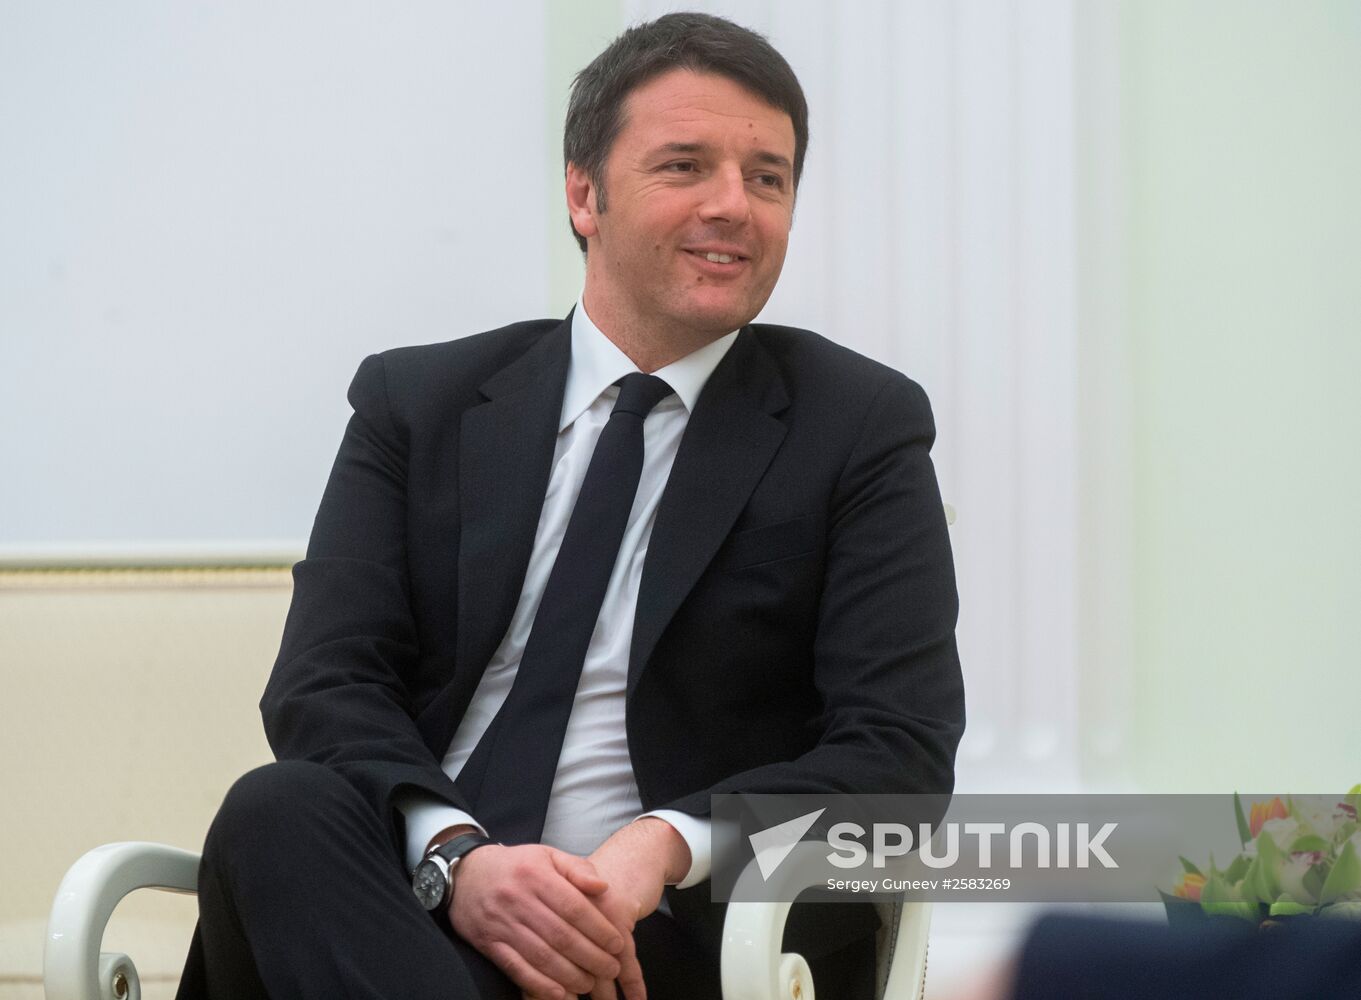 President Putin meets with Italian Prime Minister Renzi